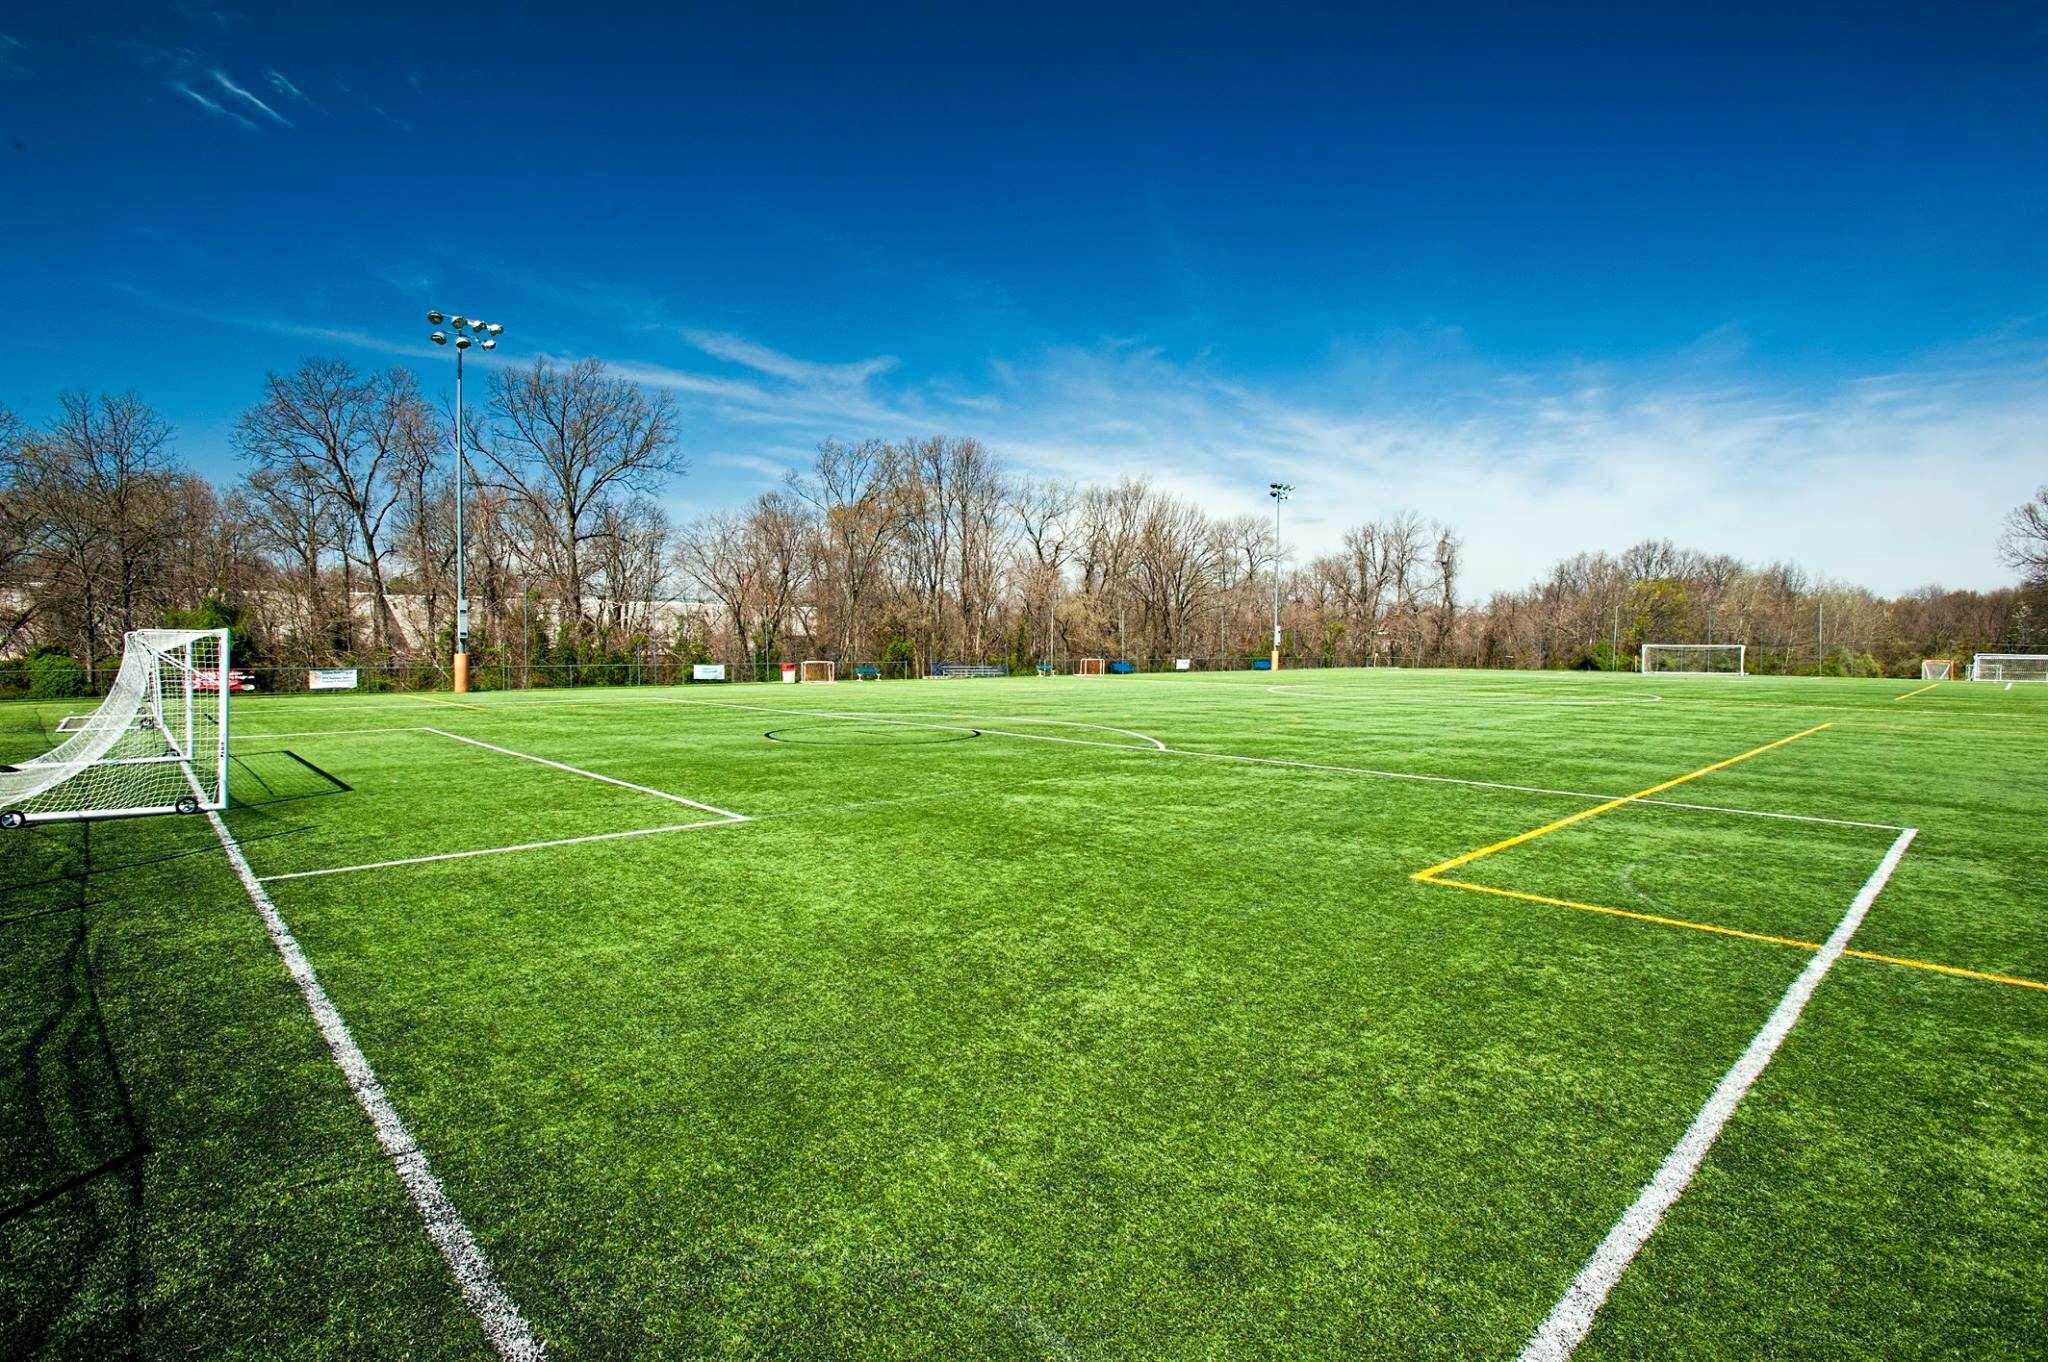 NJ Outdoor Soccer Turf Rentals - Outdoor Soccer Fields in New Jersey